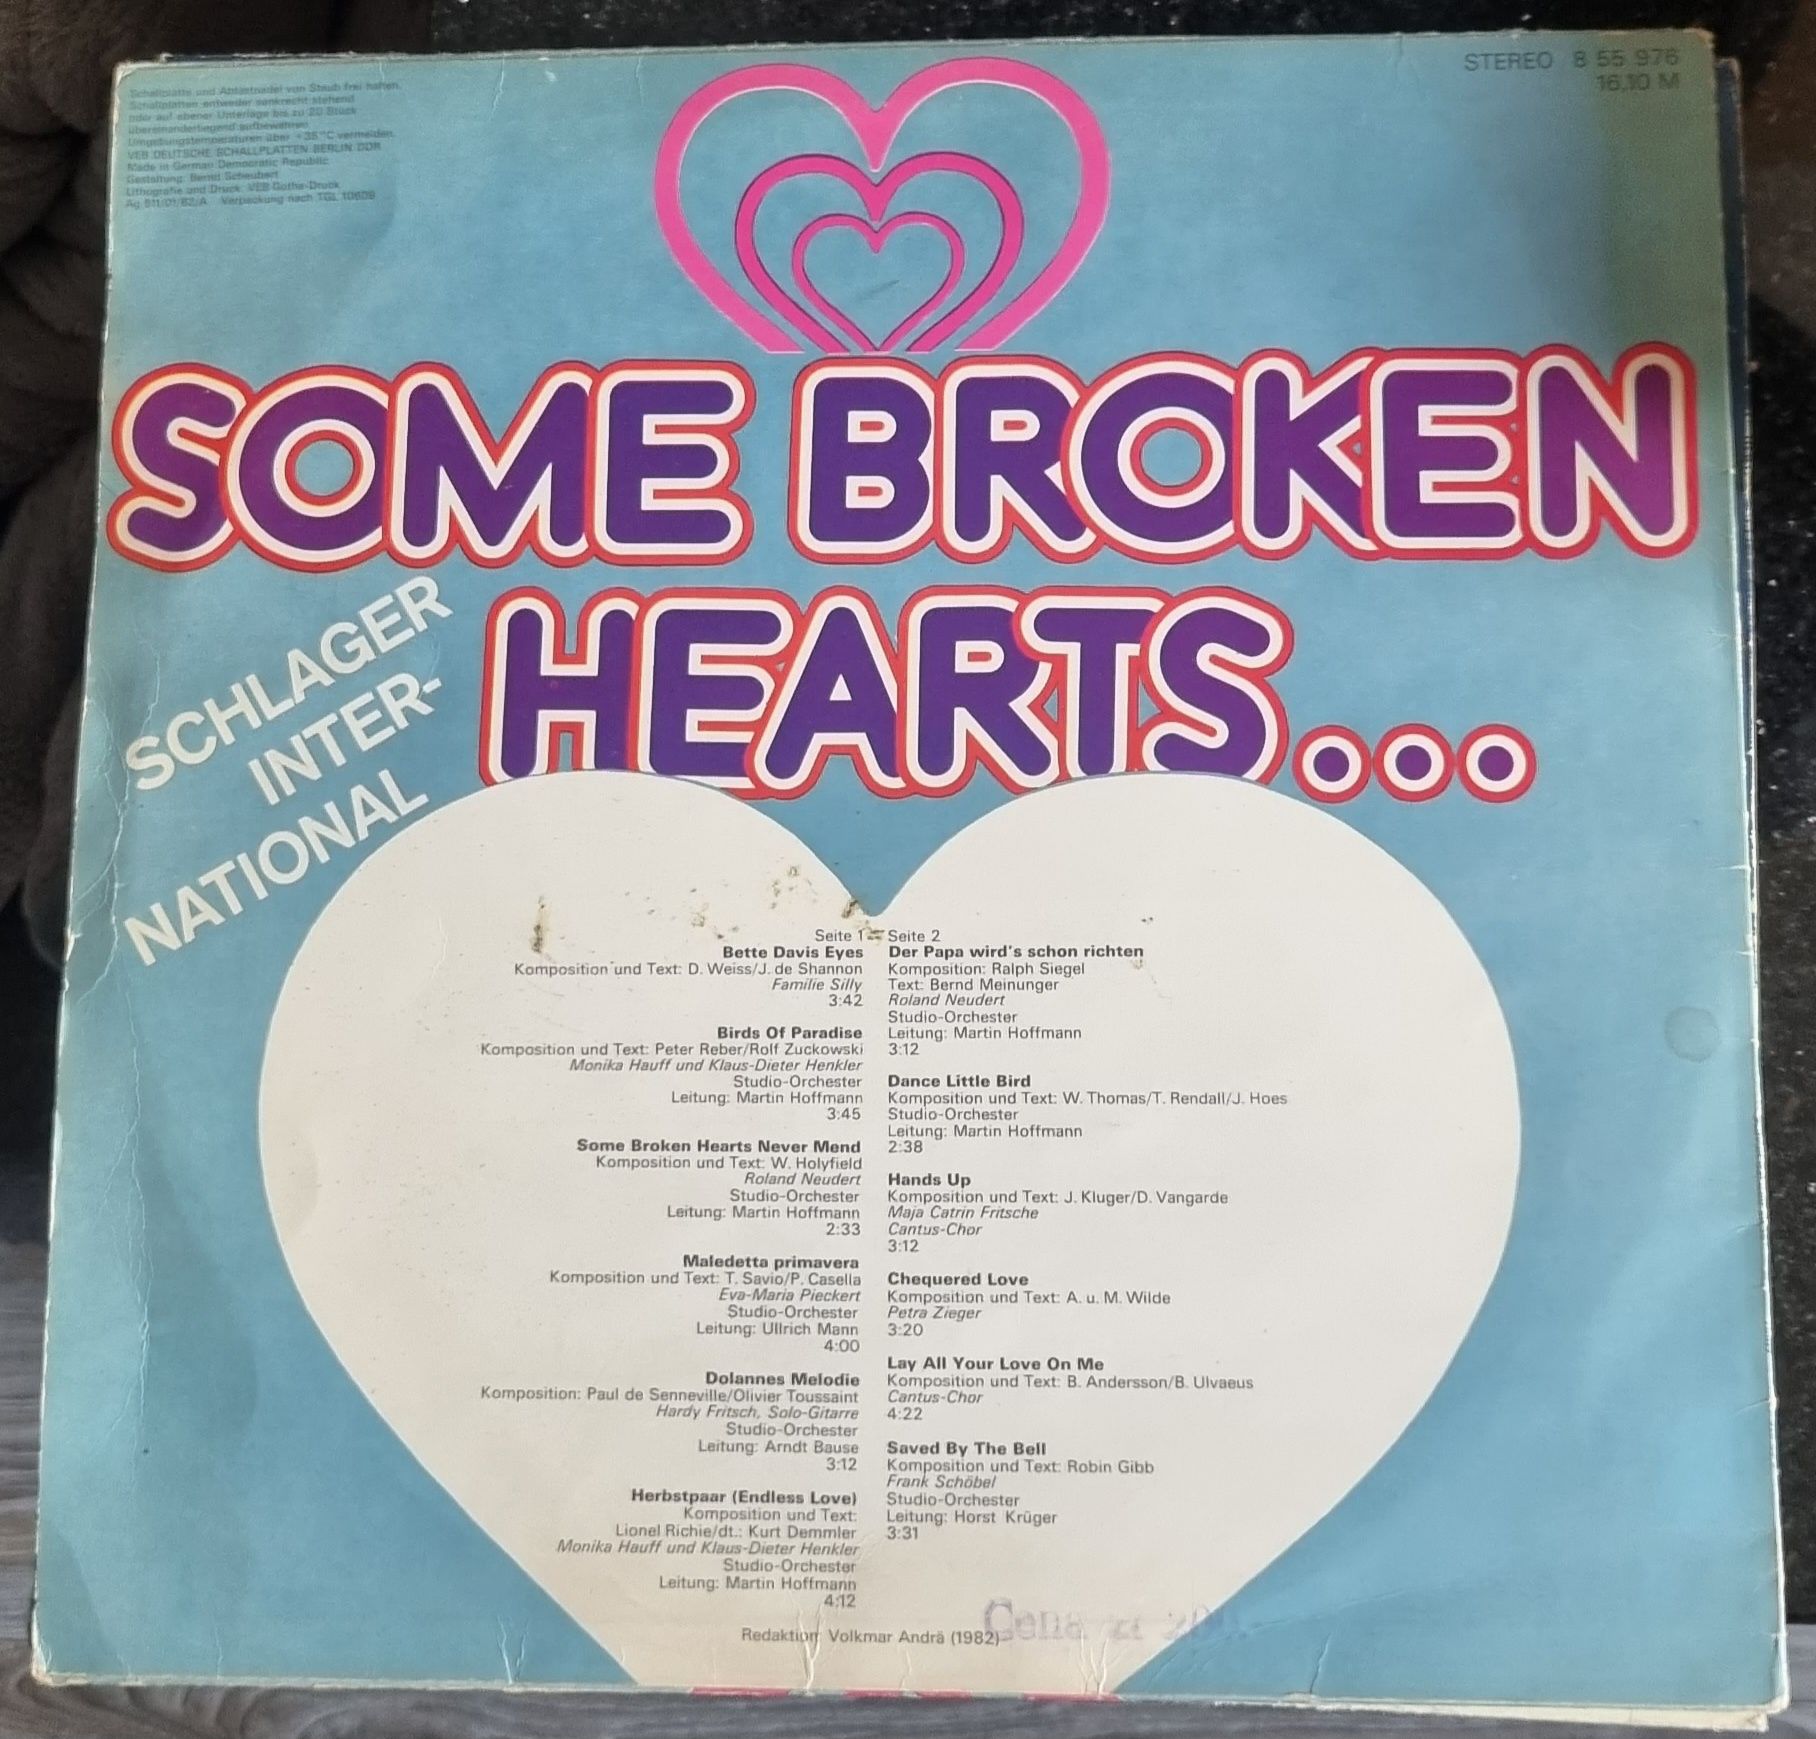 Winyl "some broken hearts"